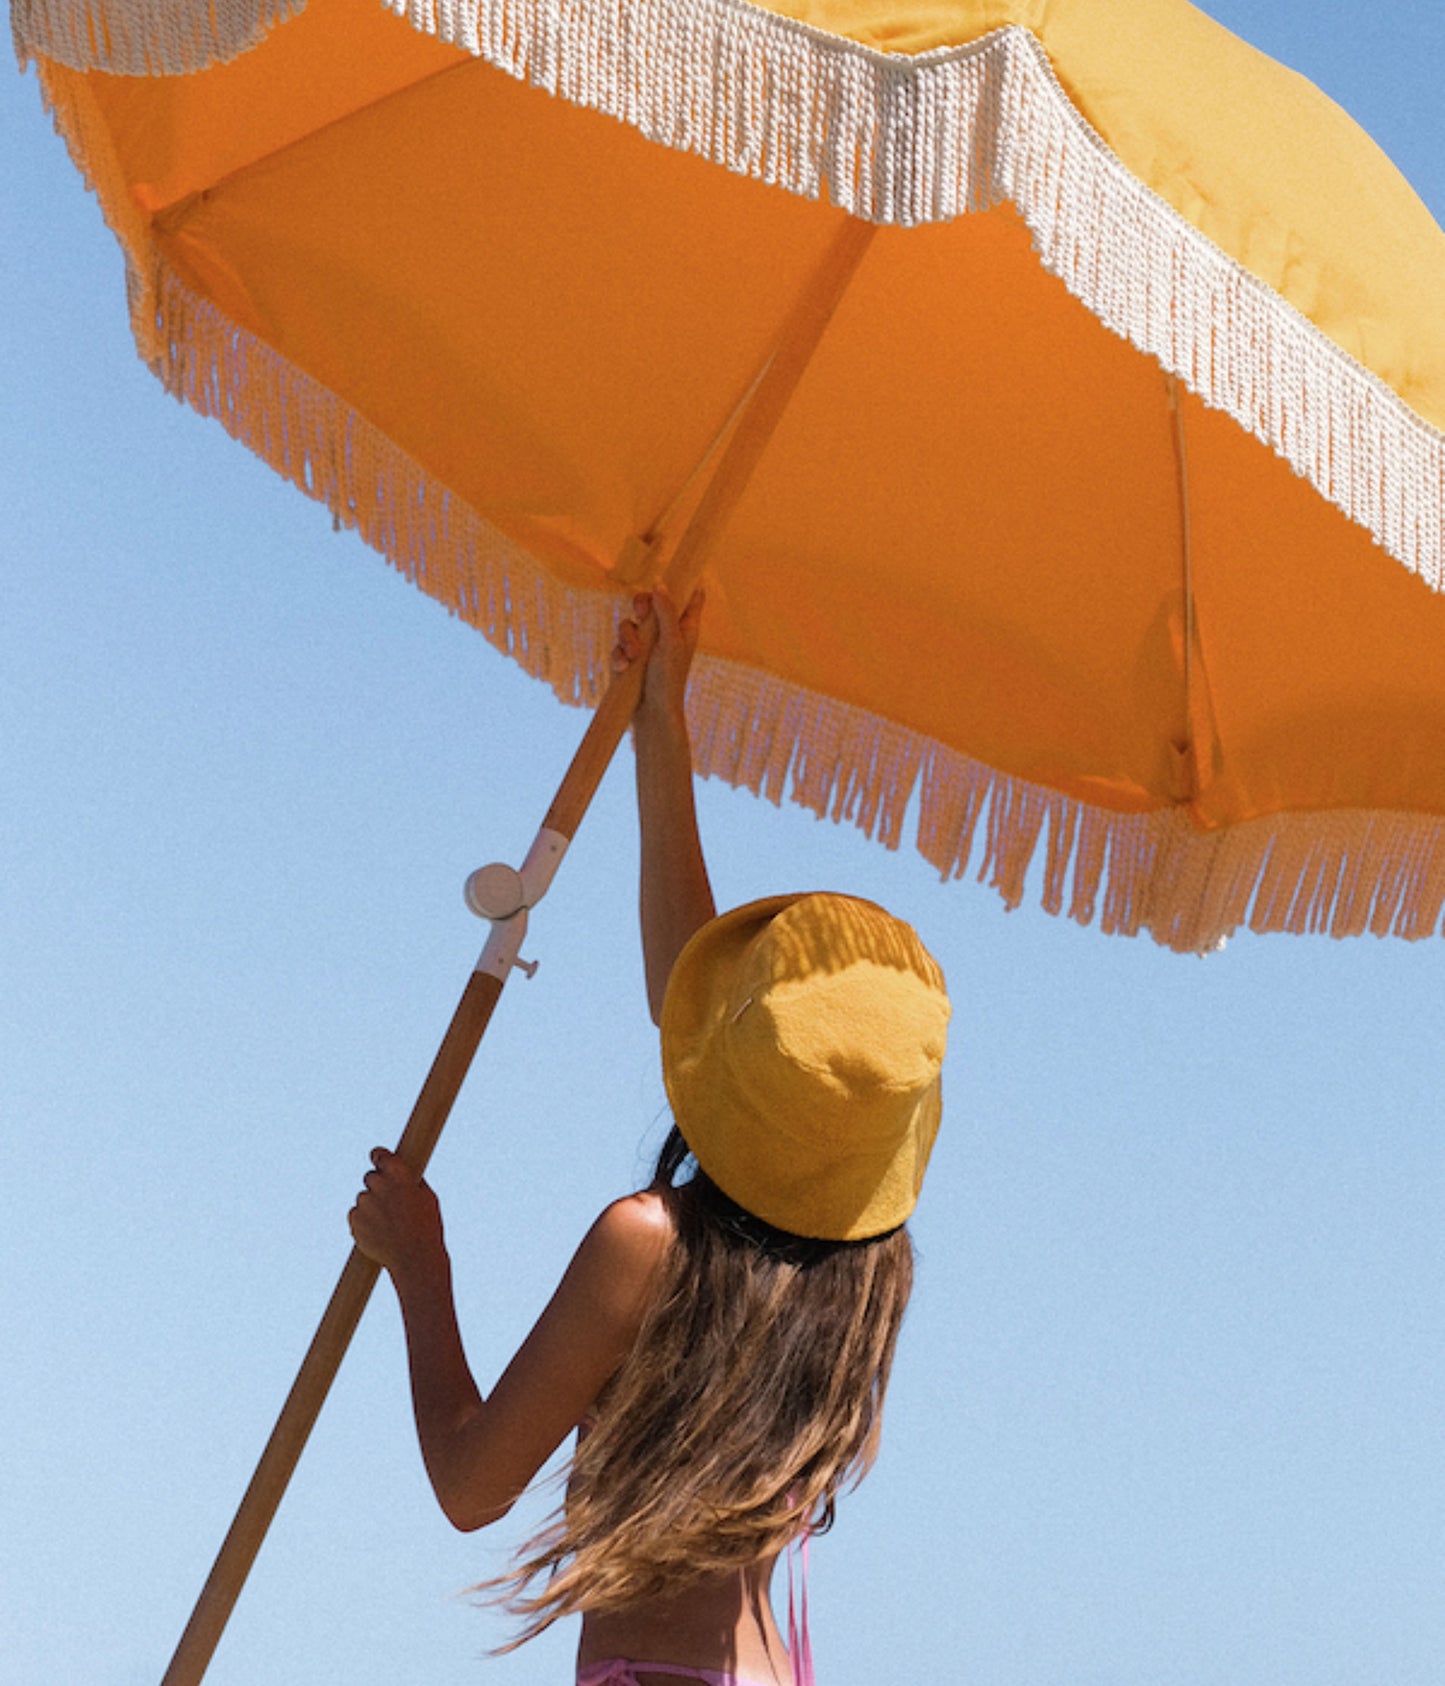 Golden Beach Umbrella